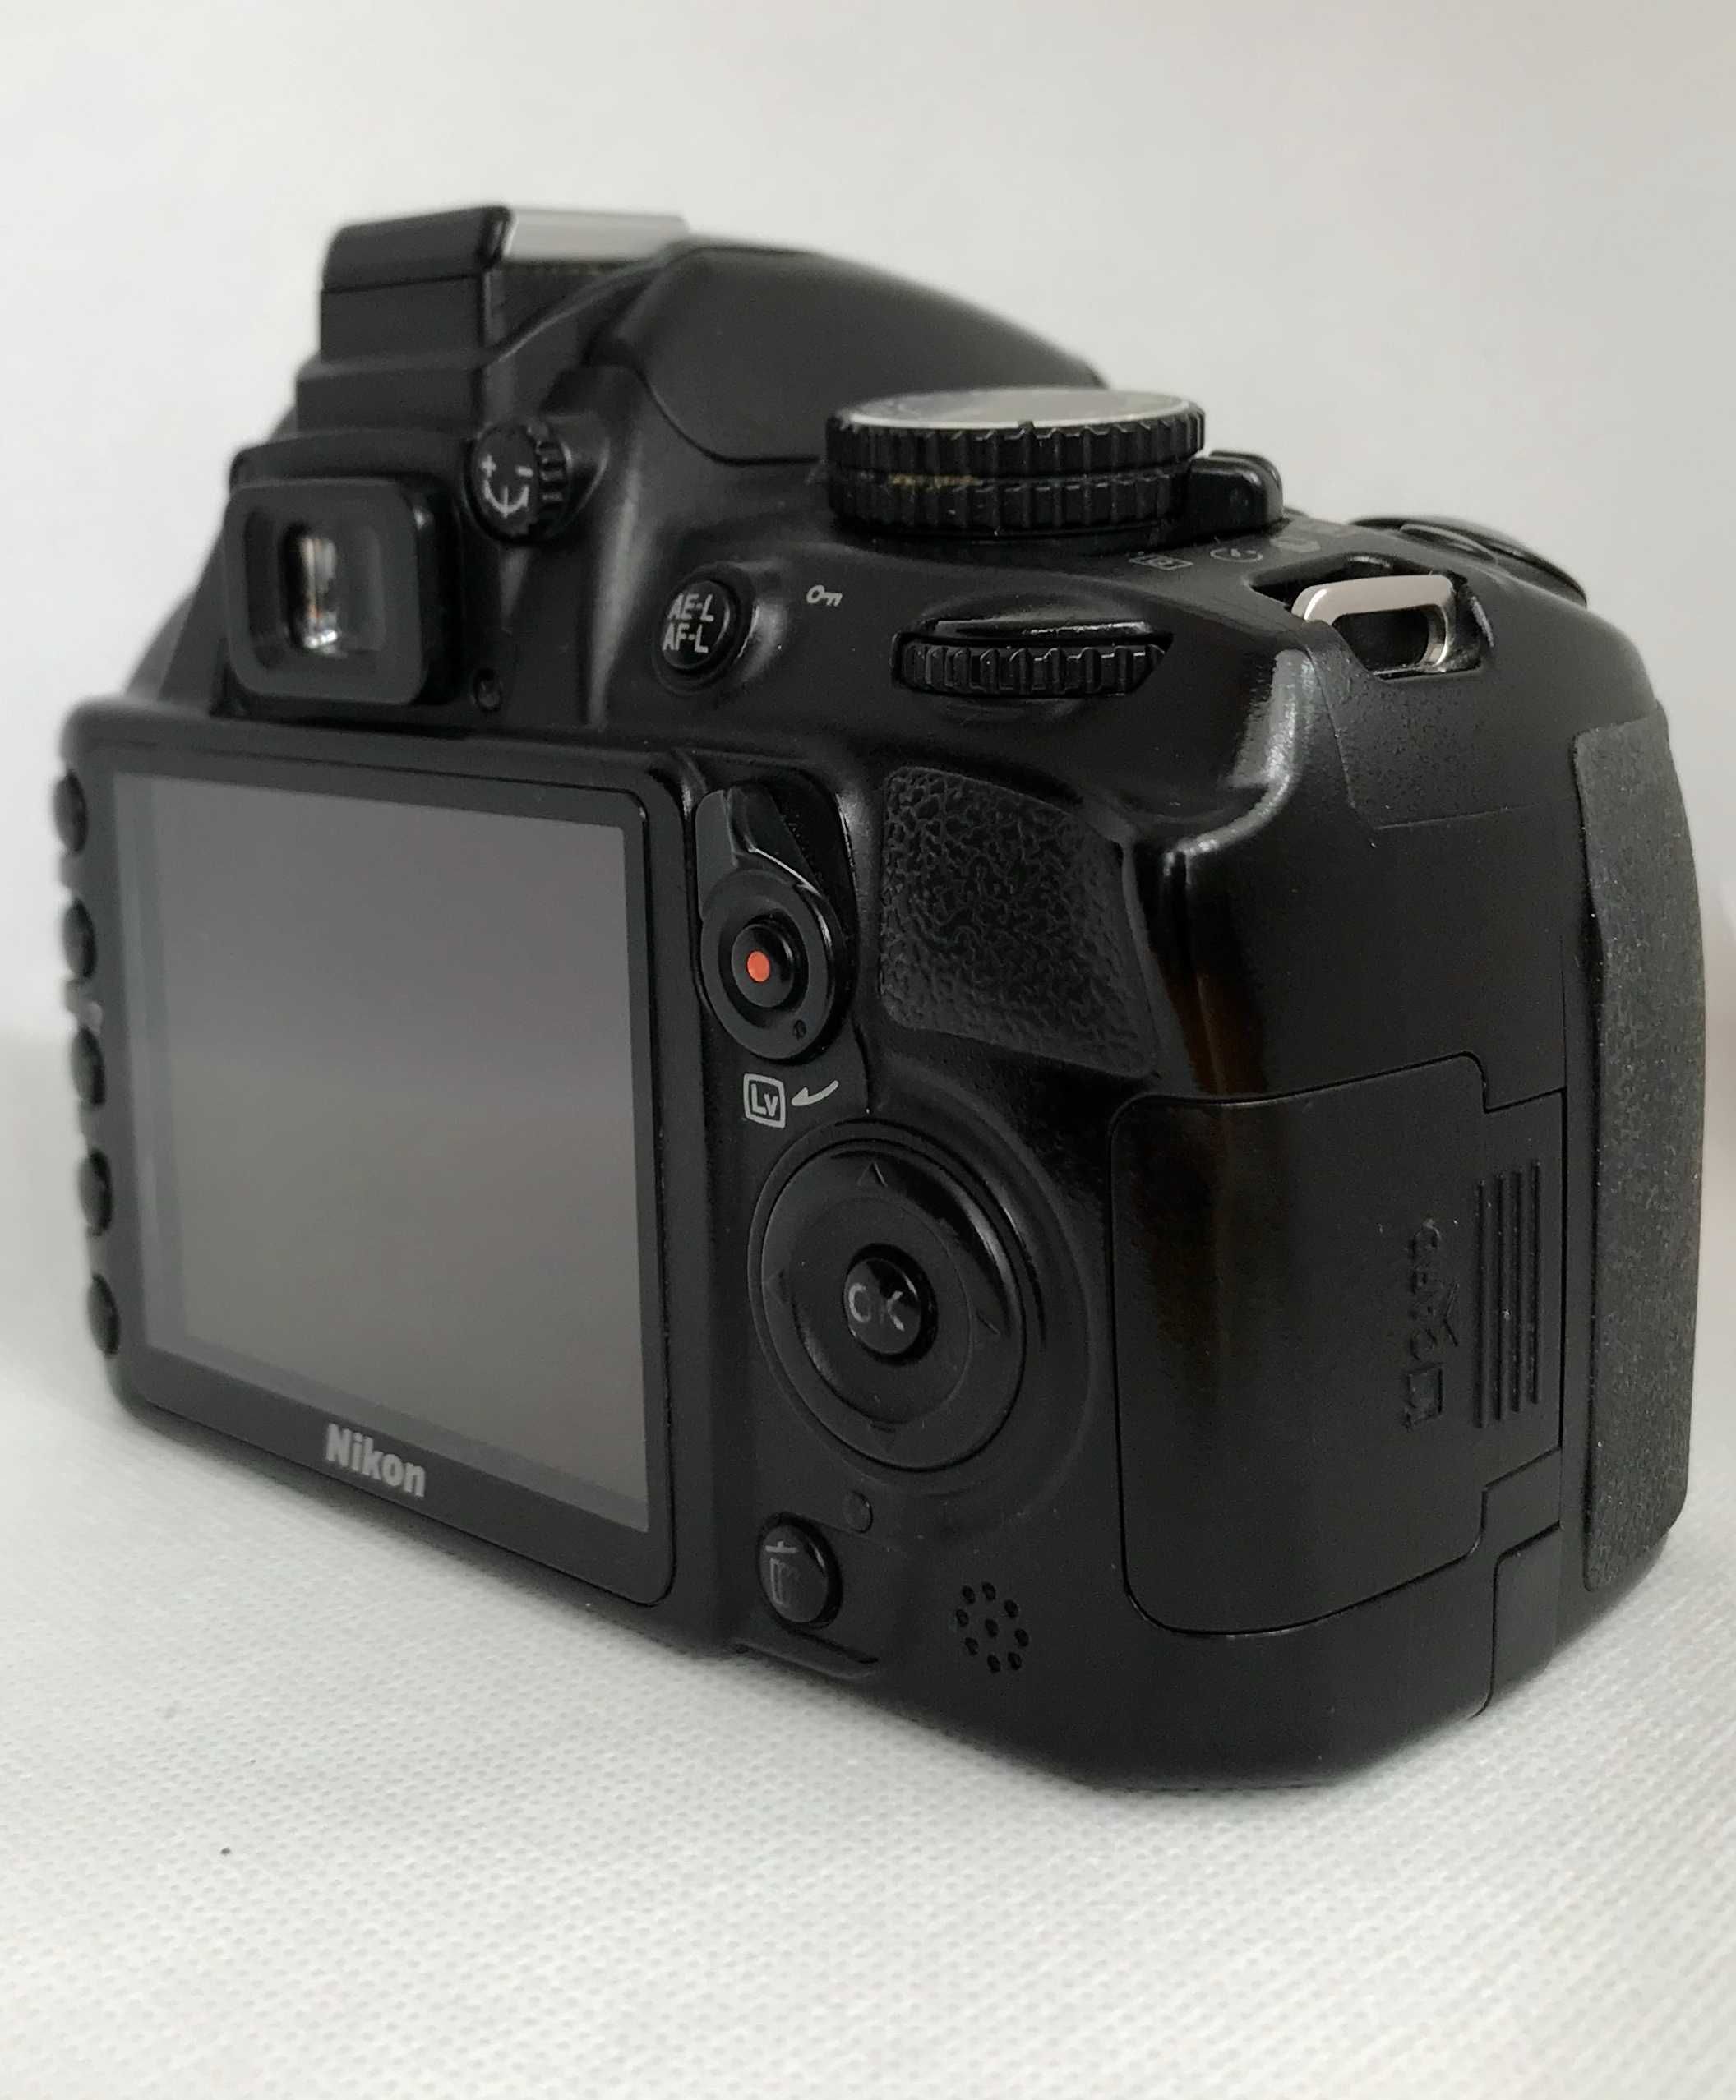 Nikon D3100 + Nikkor 18-55 mm + dodatki